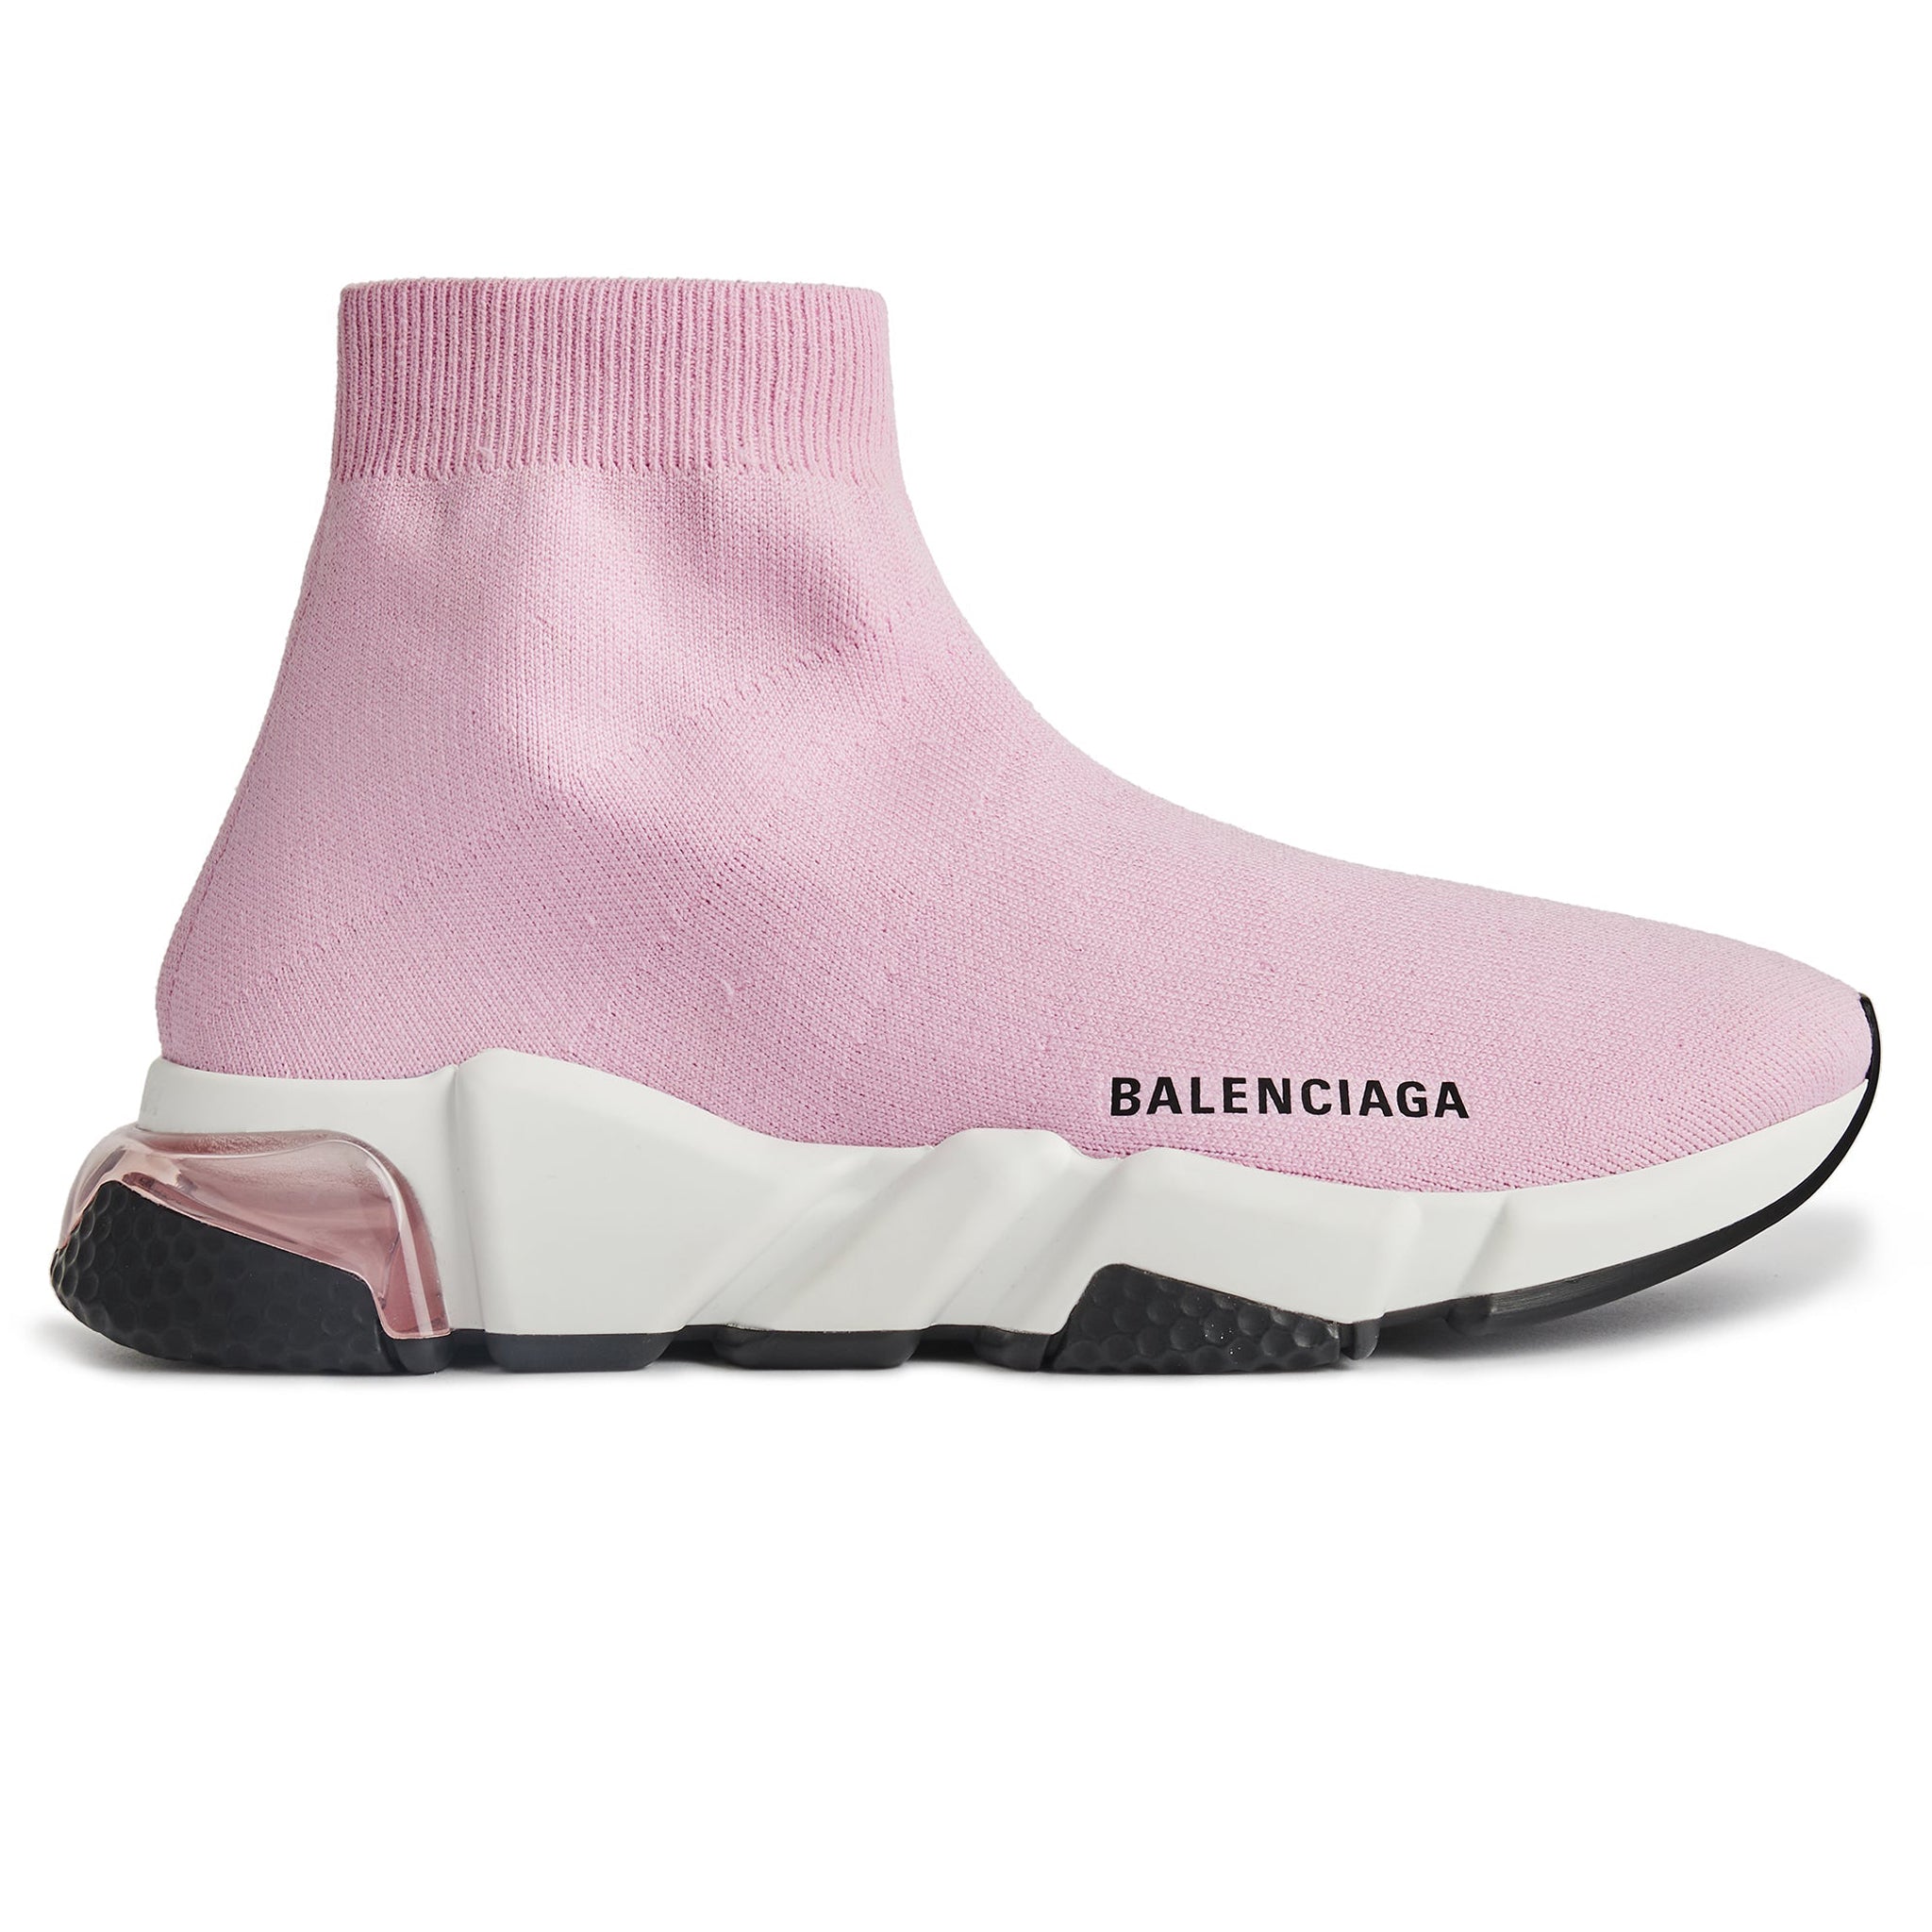 Balenciaga turns its chunky Track sneaker into a 1K hiking boot